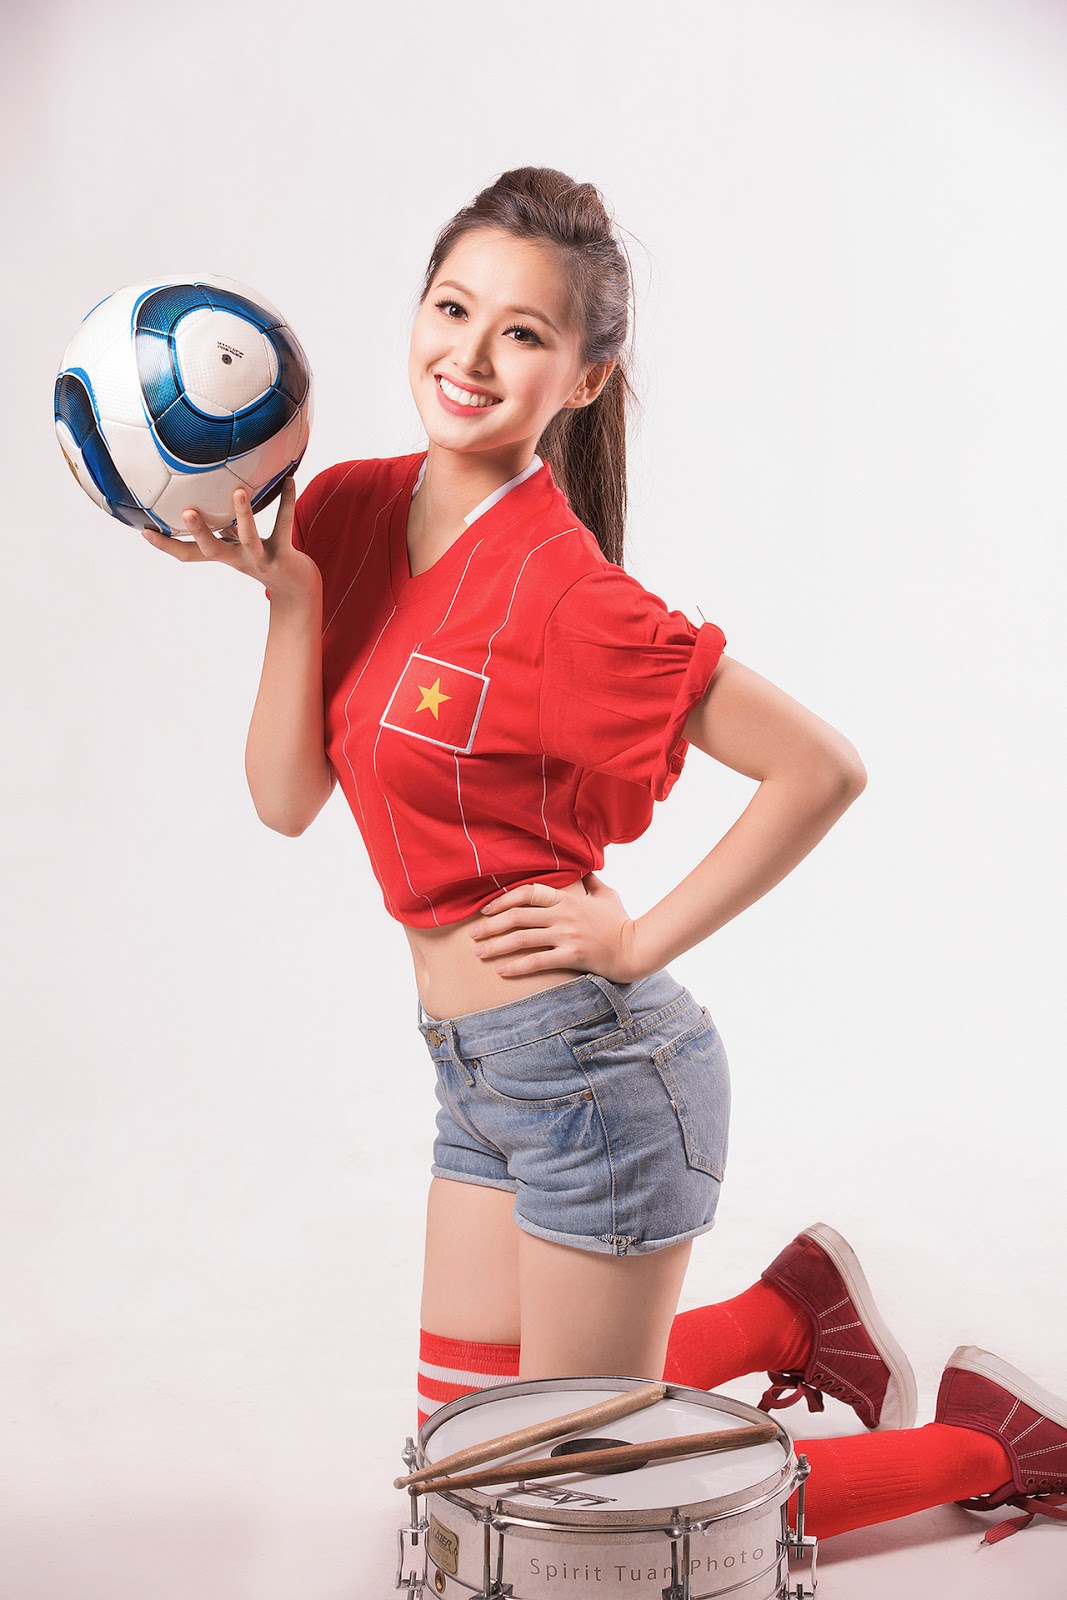 Tam Tit Hotgirl, Vietnam Hotgirl, Asia Hotgirl1067 x 1600